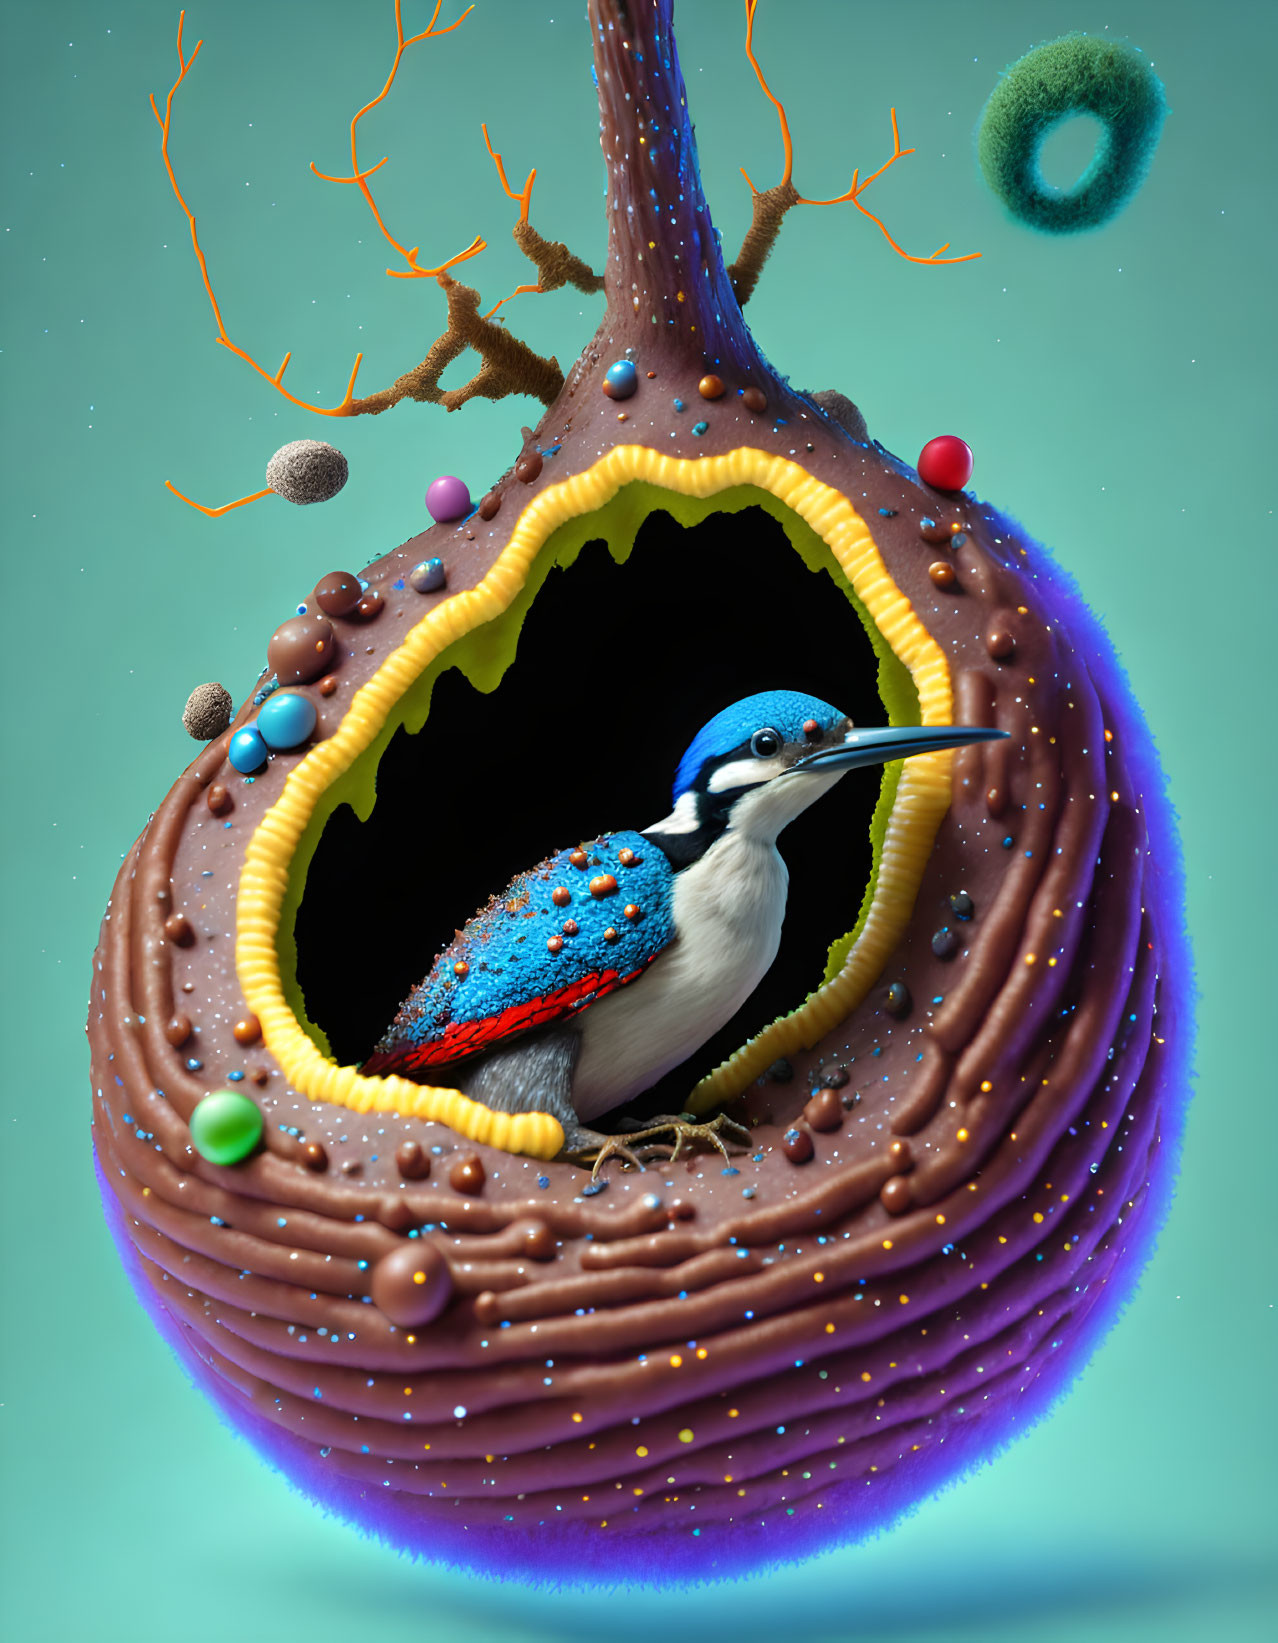 Woodpecker in a chocolate nest